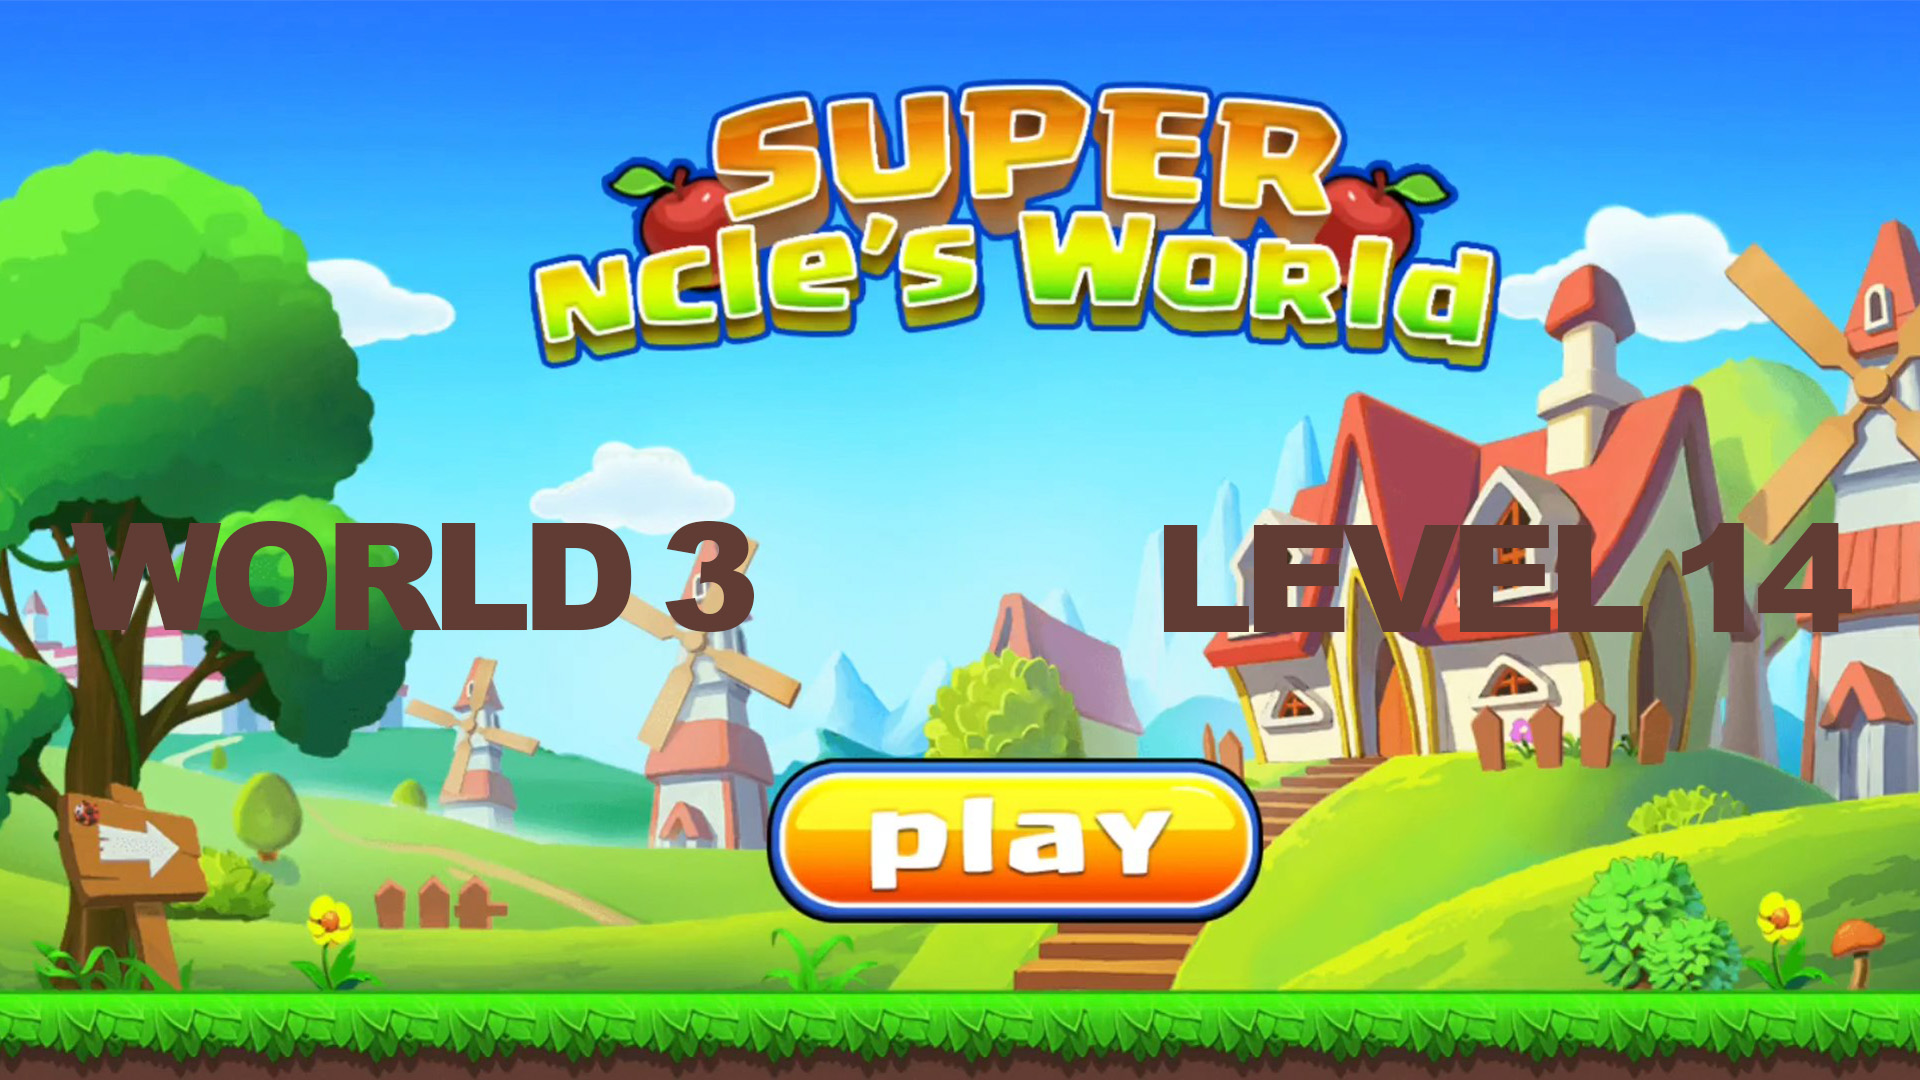 Super ncle's  World 3. Level 14.